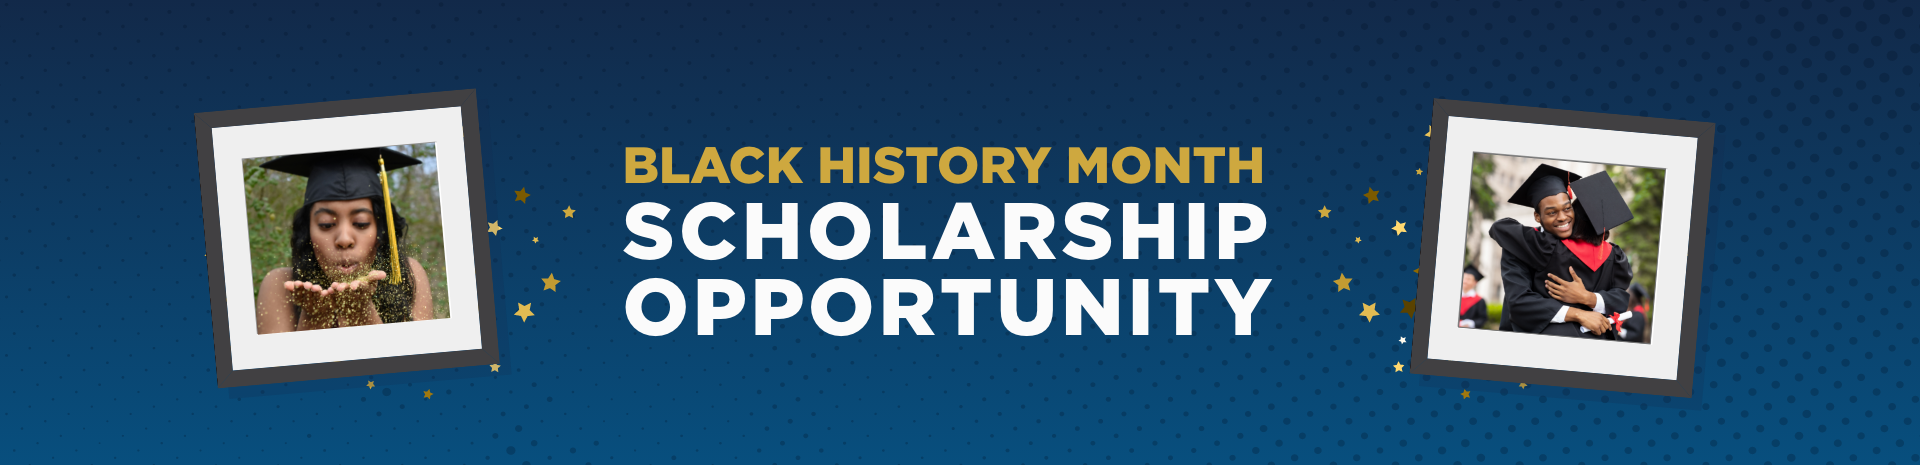 Black History Month Scholarship Opportunity